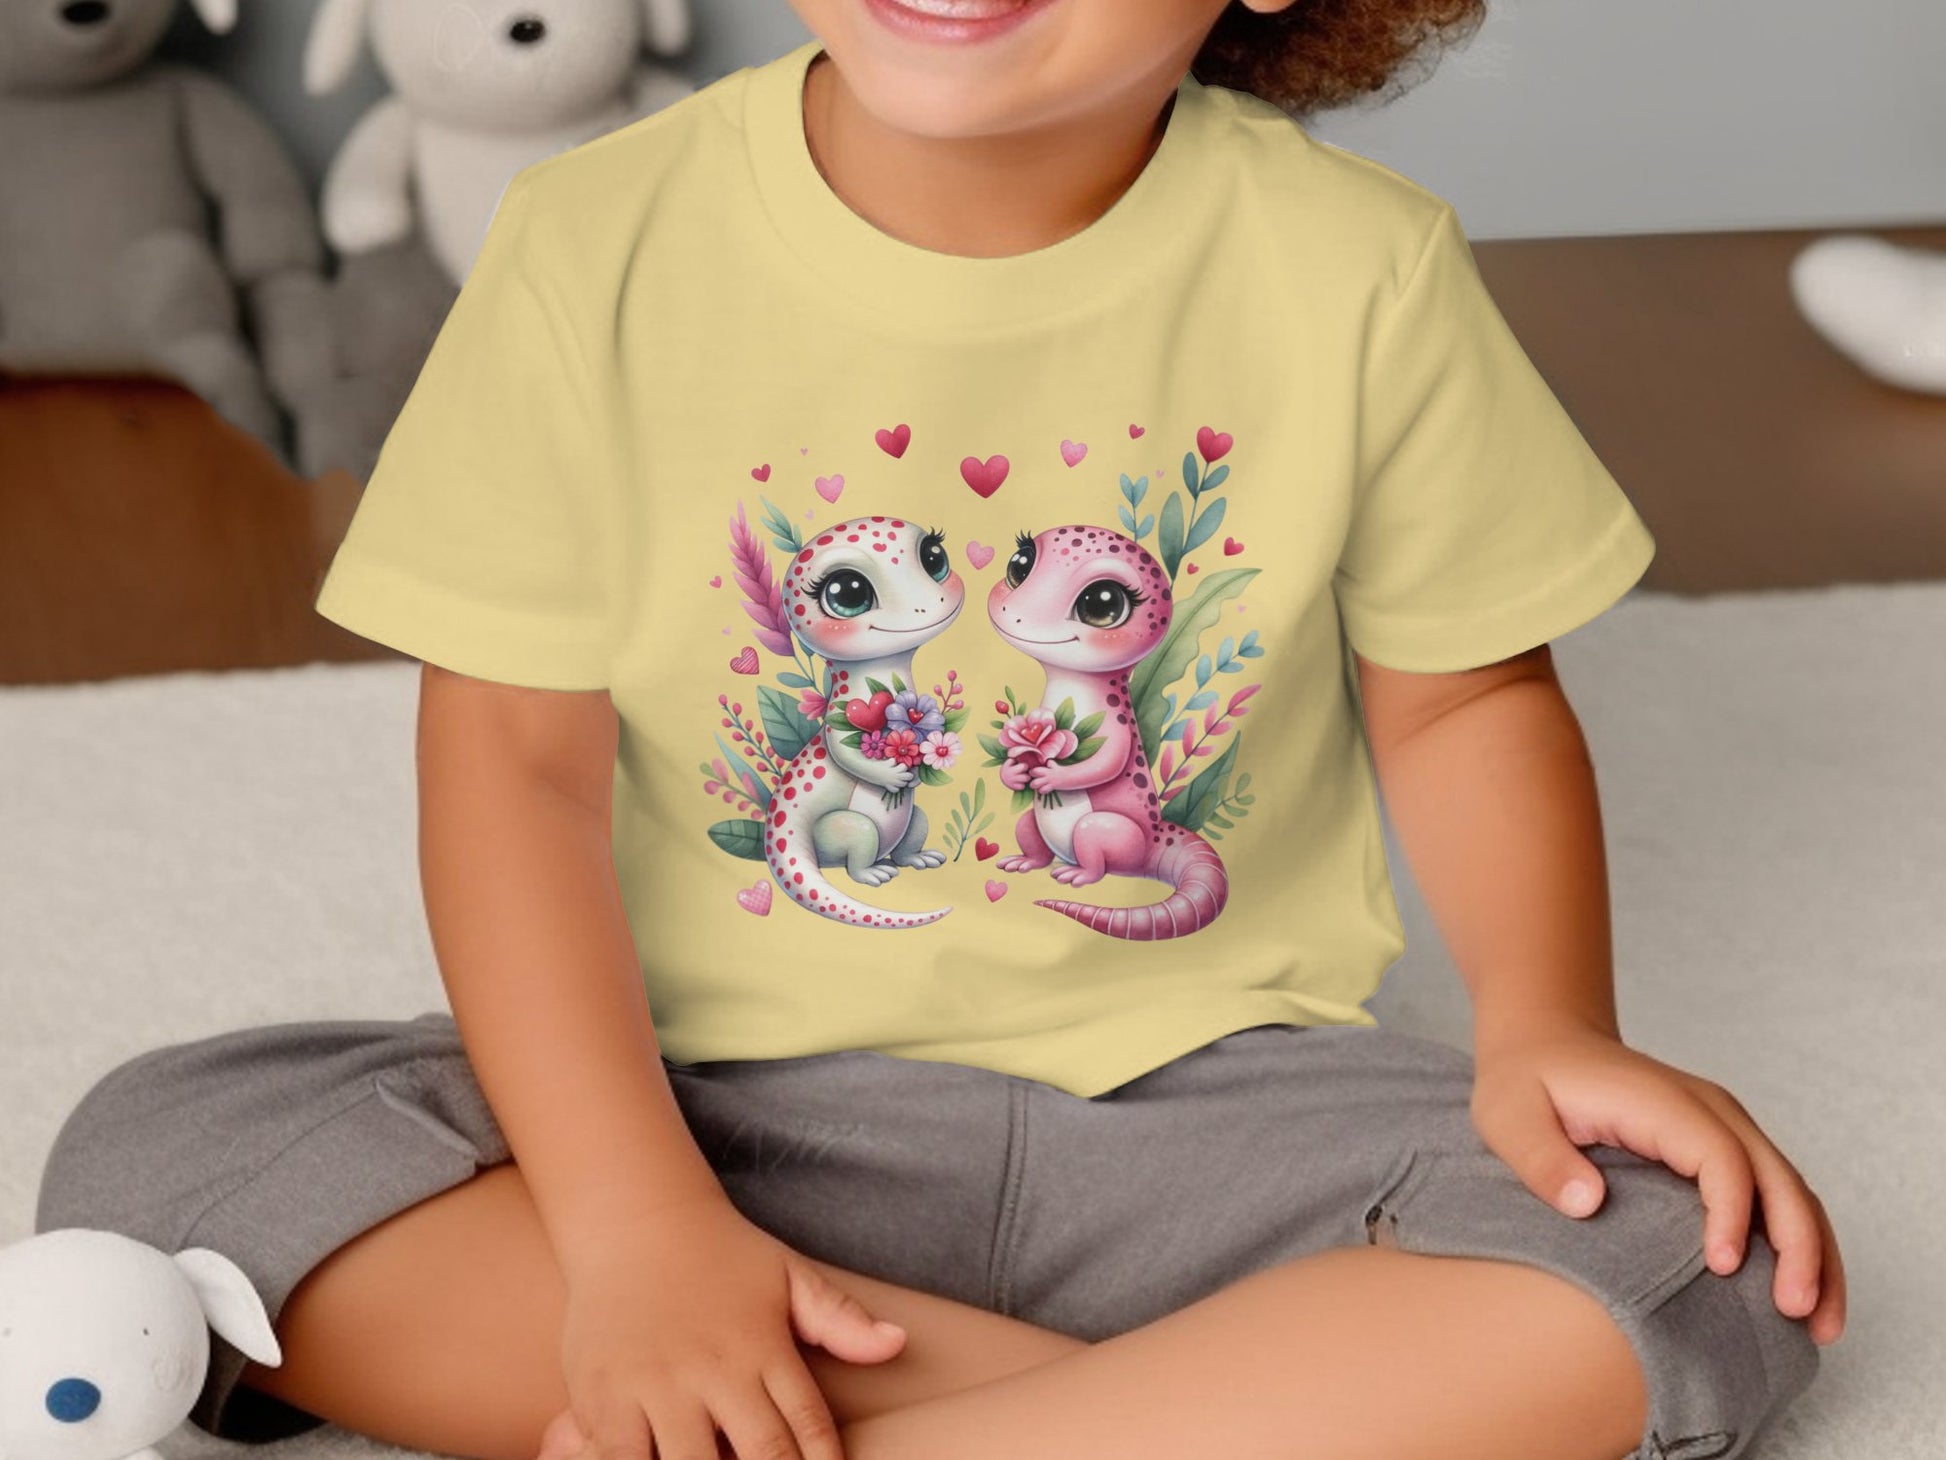 Adorable Lizard Cartoon T-shirt for Toddlers, Cute Geckos Graphic Tee